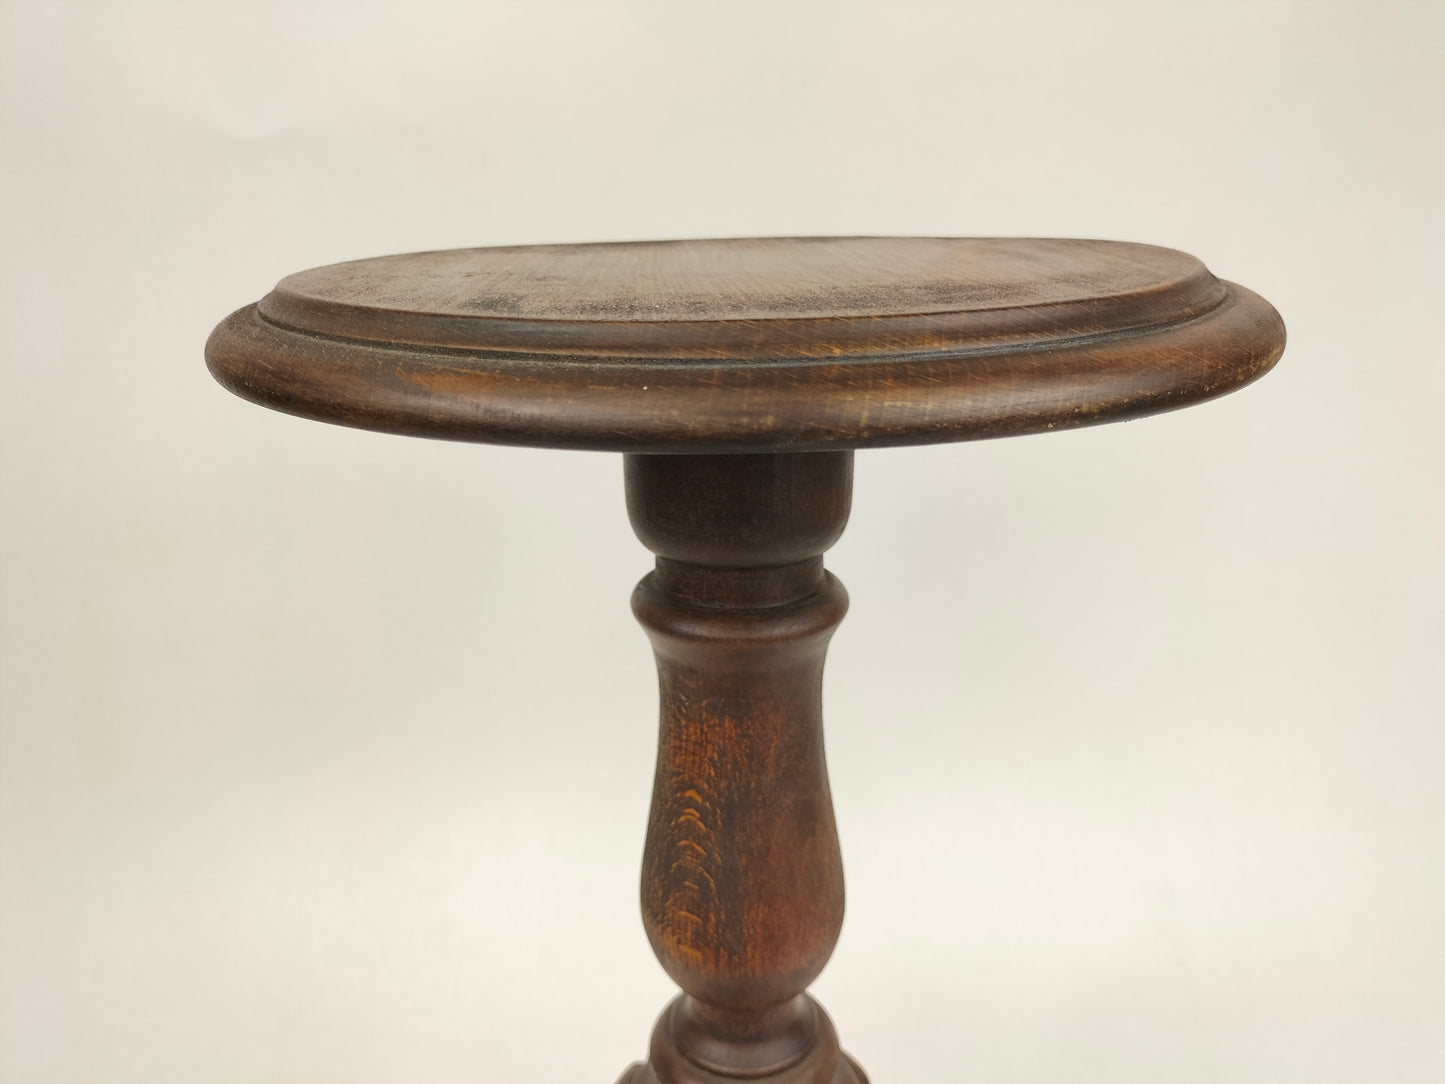 Vintage handmade wooden plant table // Belgium - Mid 20th century